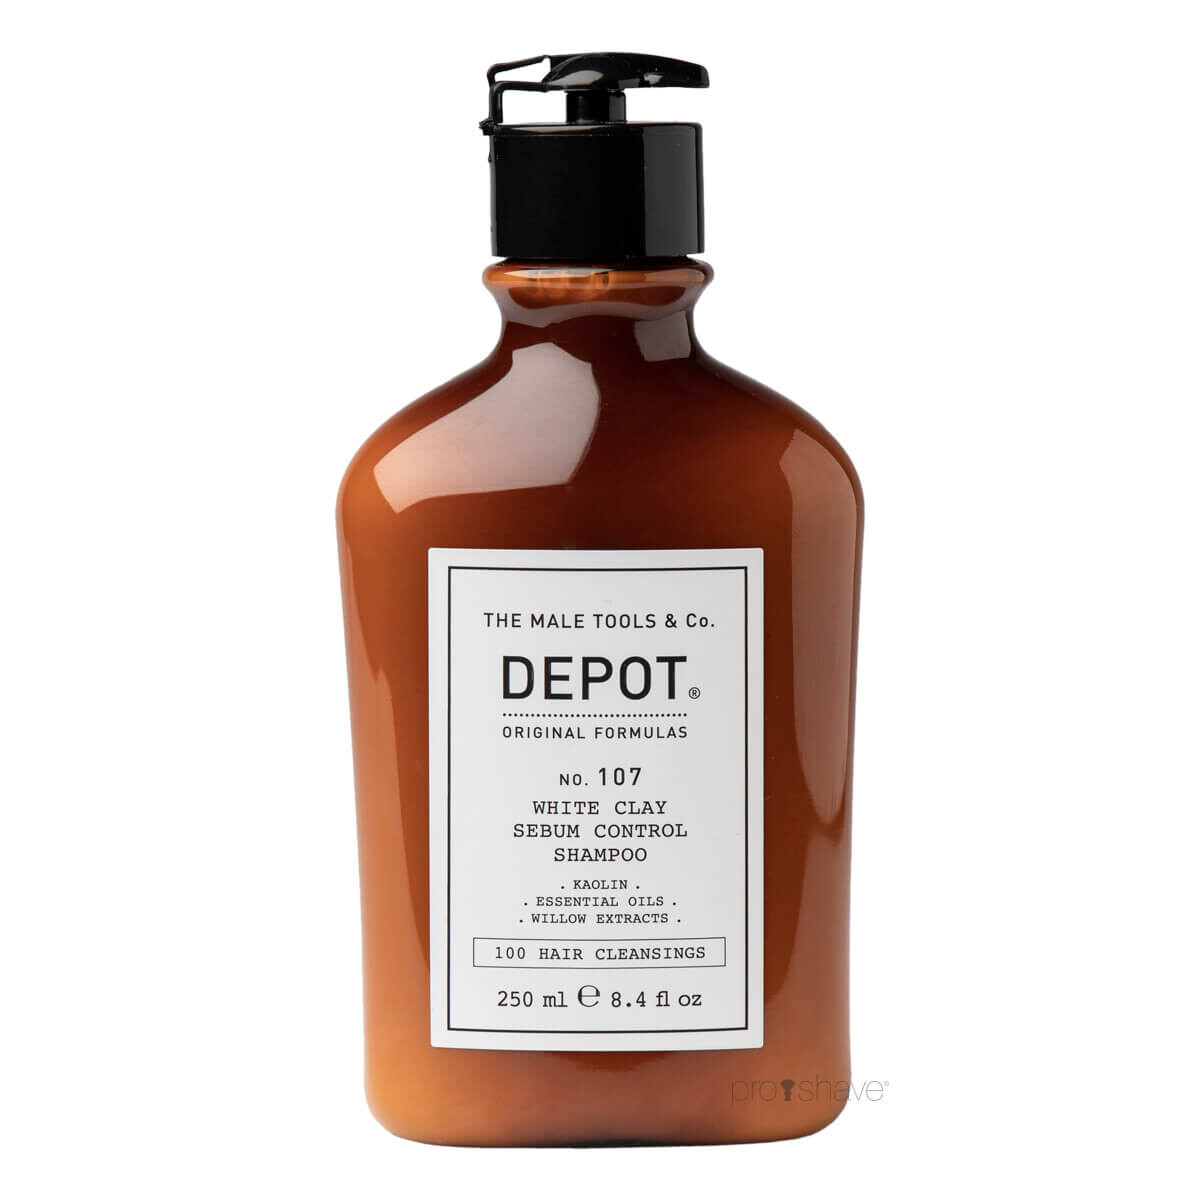 13: Depot White Clay Sebum Control Shampoo, No. 107, 250 ml.